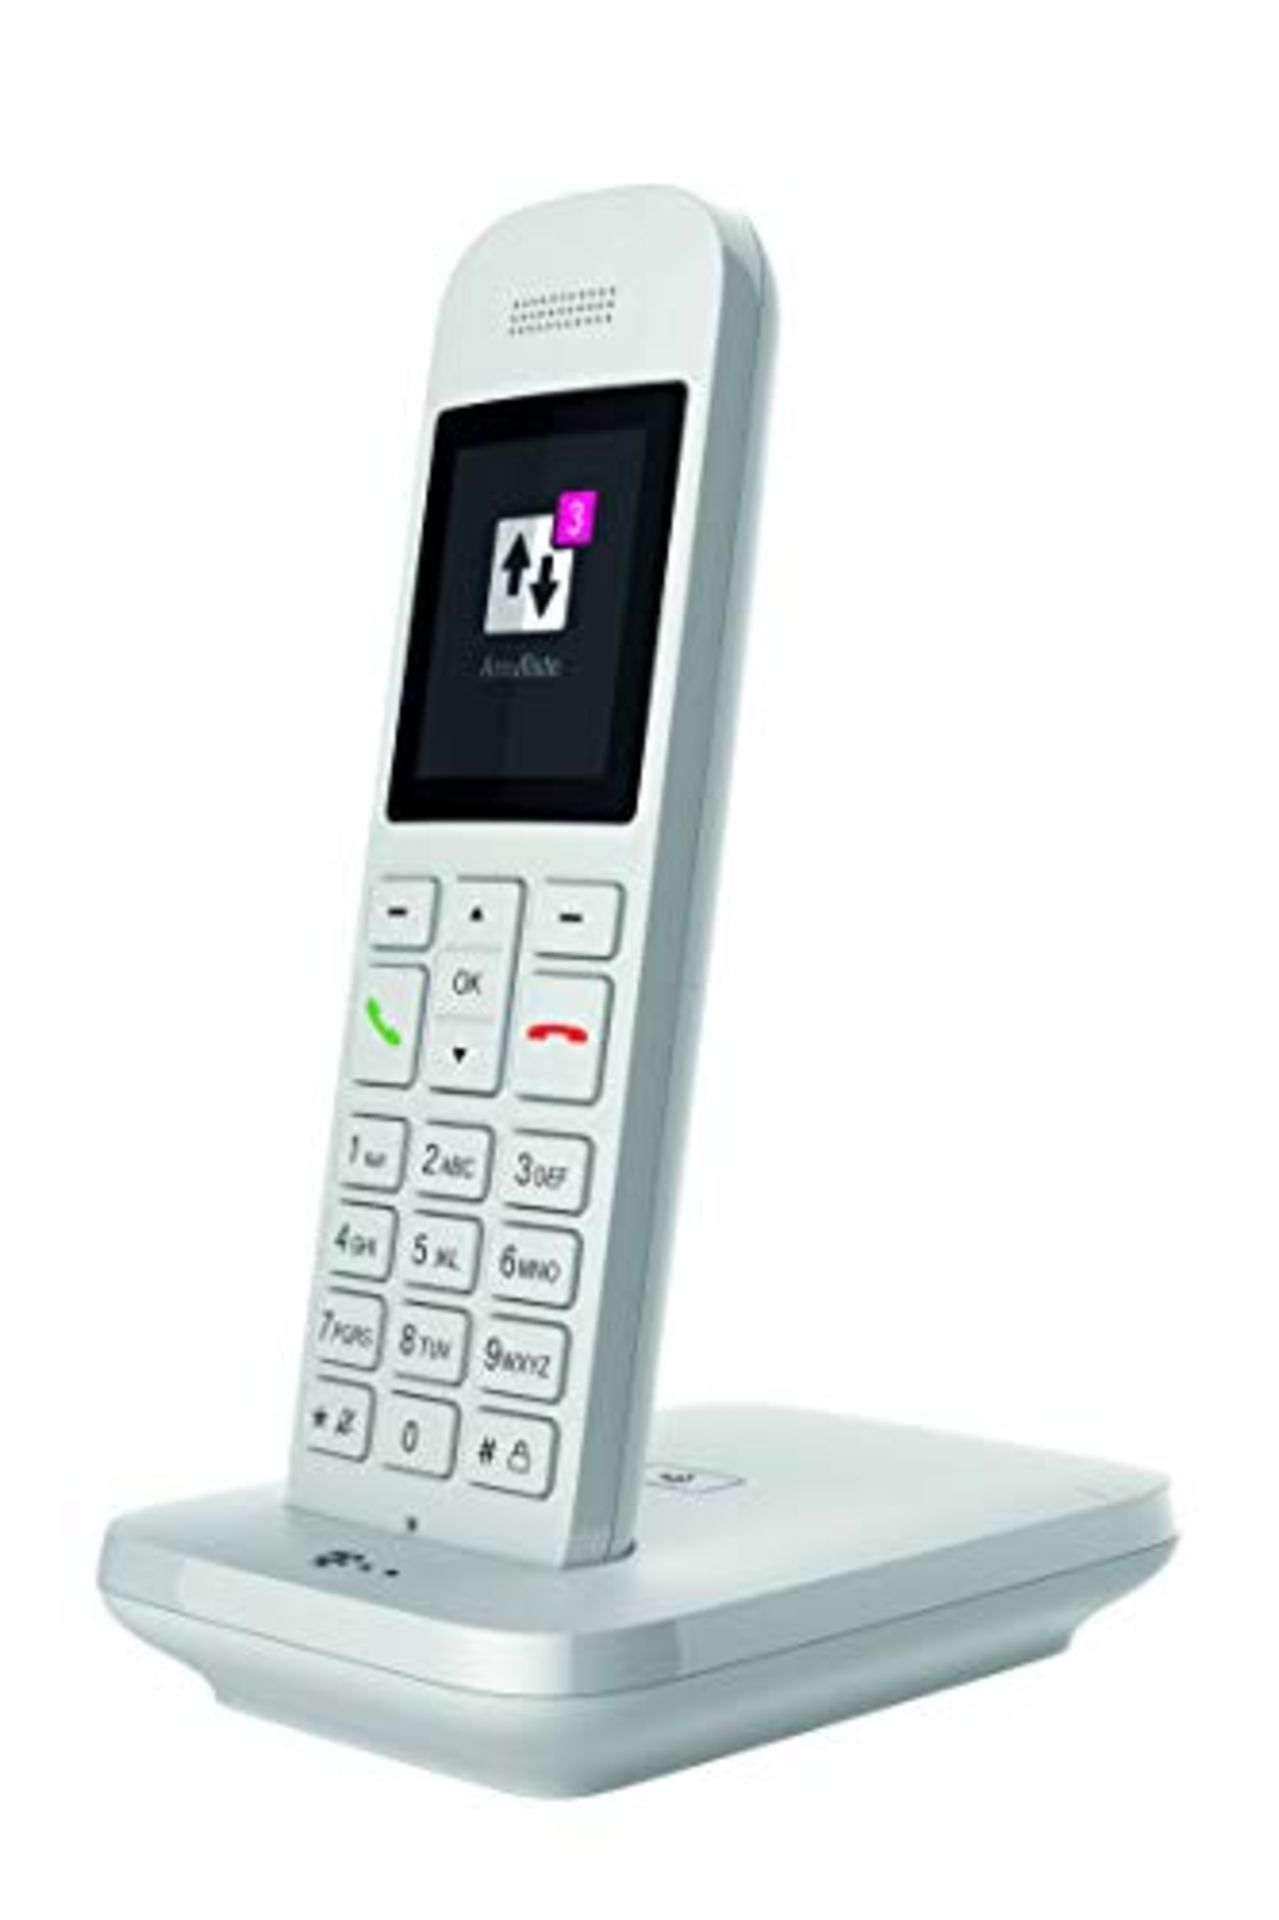 Telekom Sinus 12 in white cordless landline telephone, 5 cm color display, illuminated